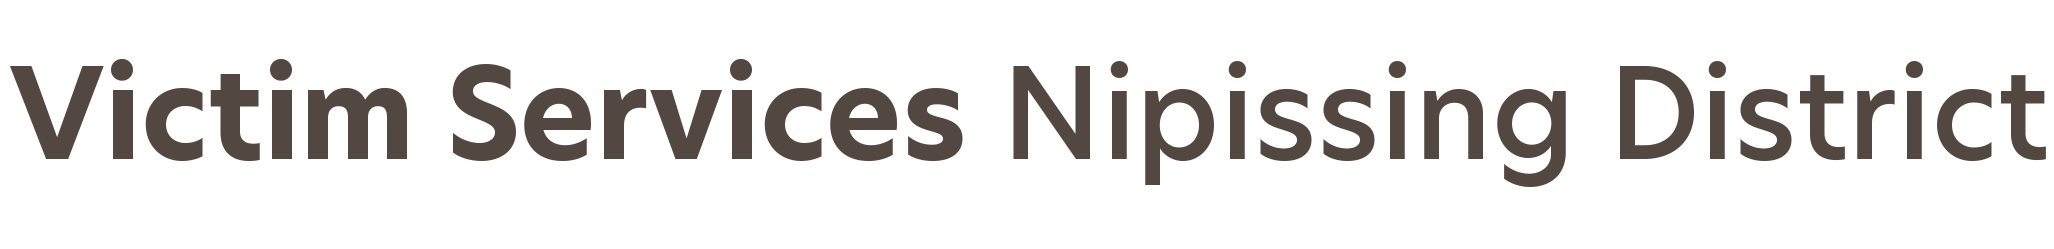 Victim Services Nipissing District Logo